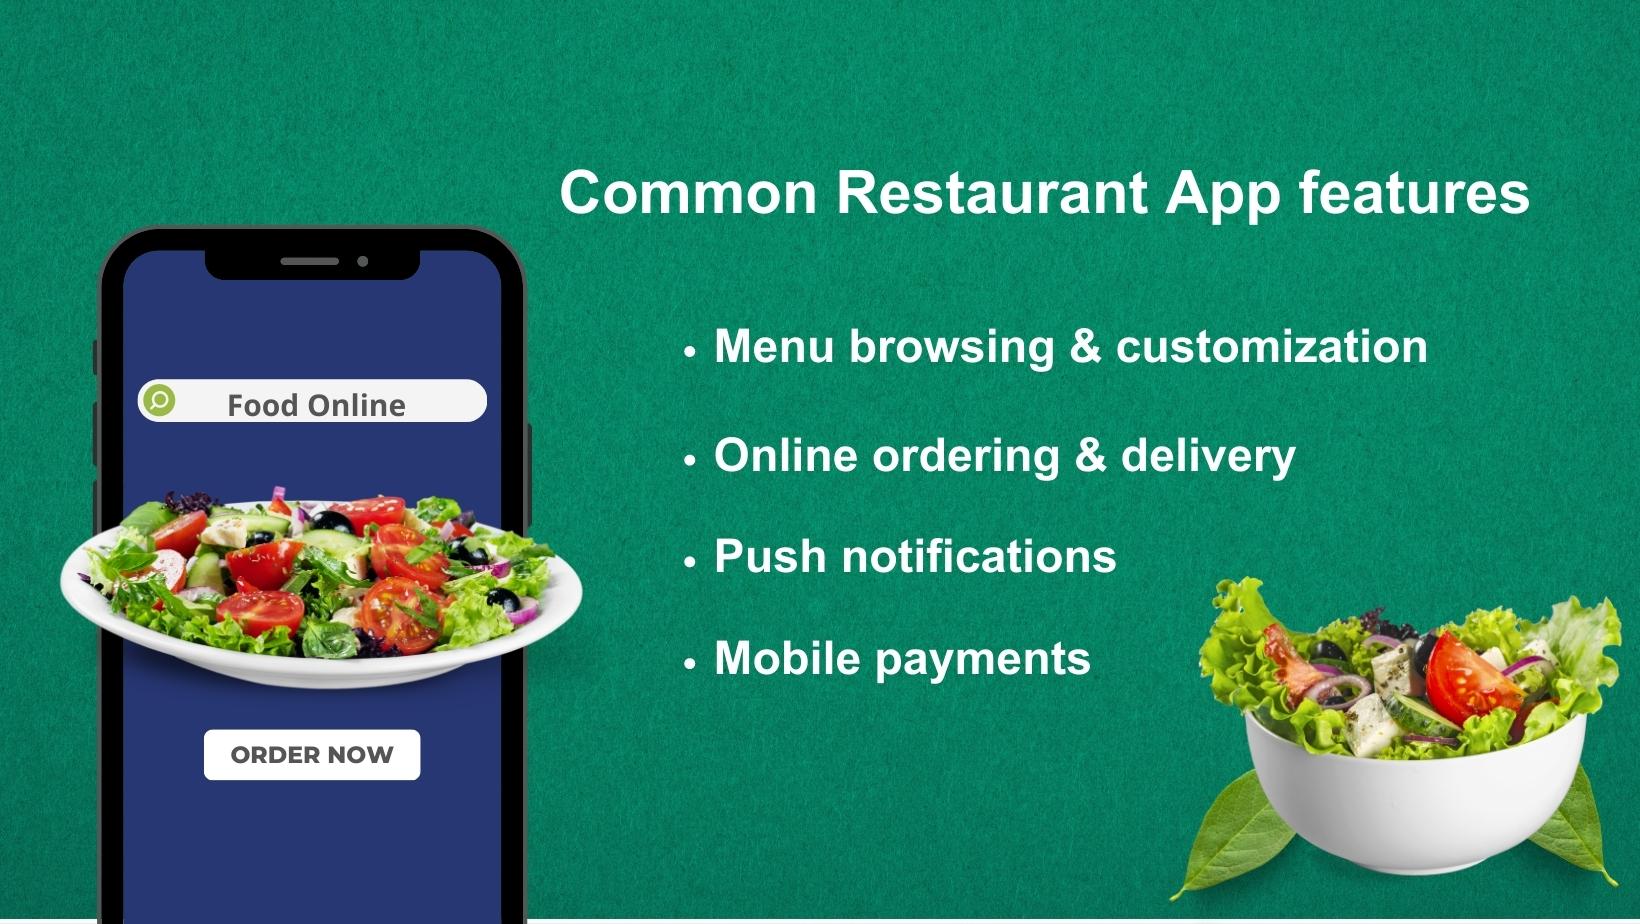 List of common restaurant features shown alongside a mobile app illustration.